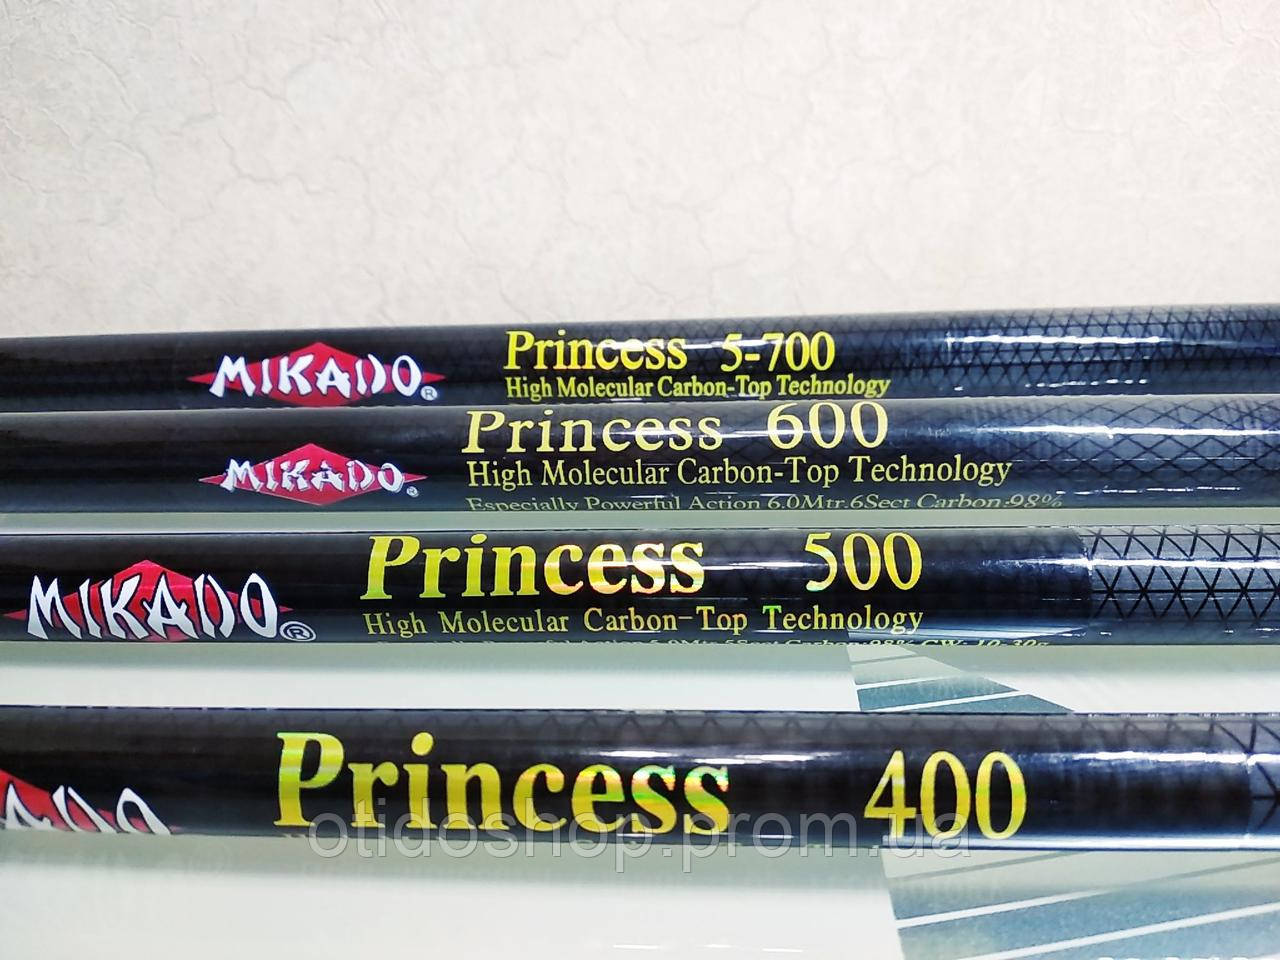 Удочка принцесса. Микадо принцесса 500 маховое. Удочка Mikado Princess 600. Удилище Mikado Princess 500. Микадо принцесса 500 с кольцами.